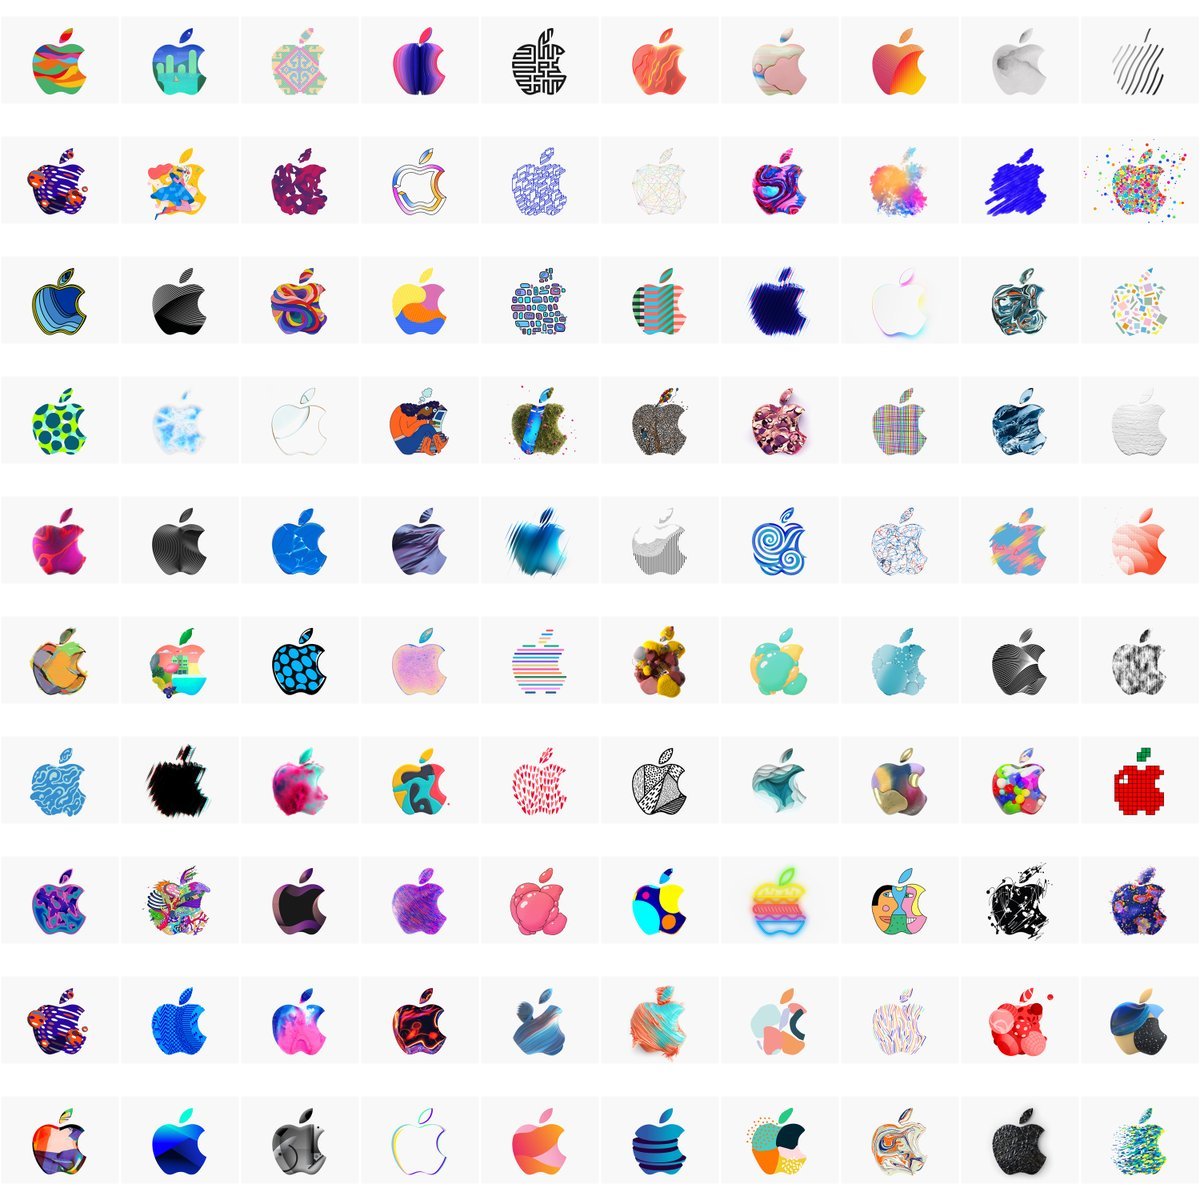 Imagen 002 keynote Apple redisena logos